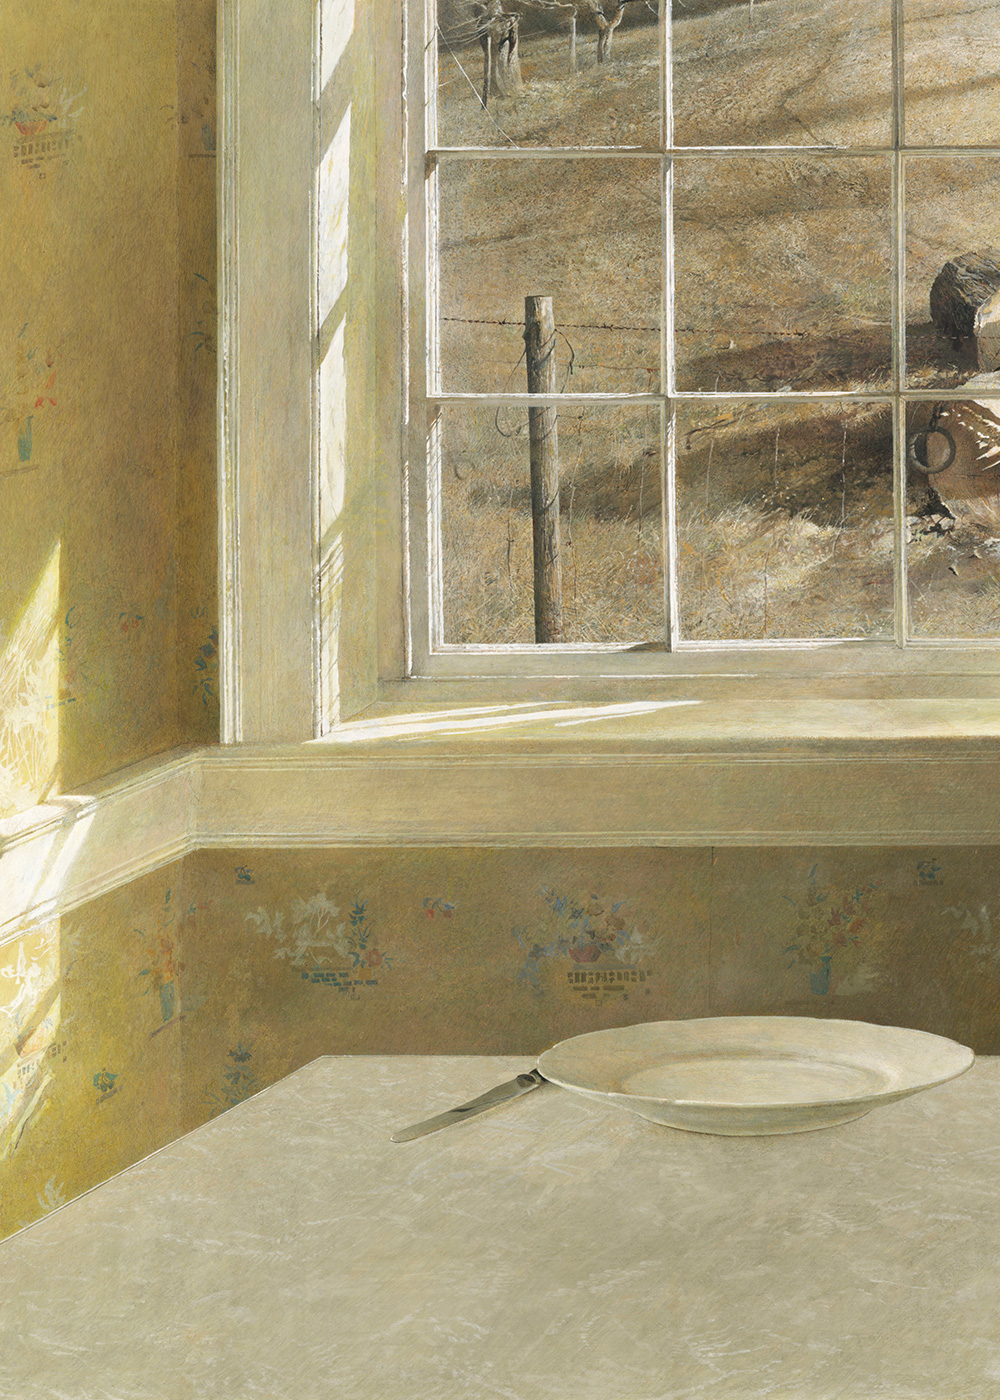 Andrew Wyeth, Groundhog Day, 1959